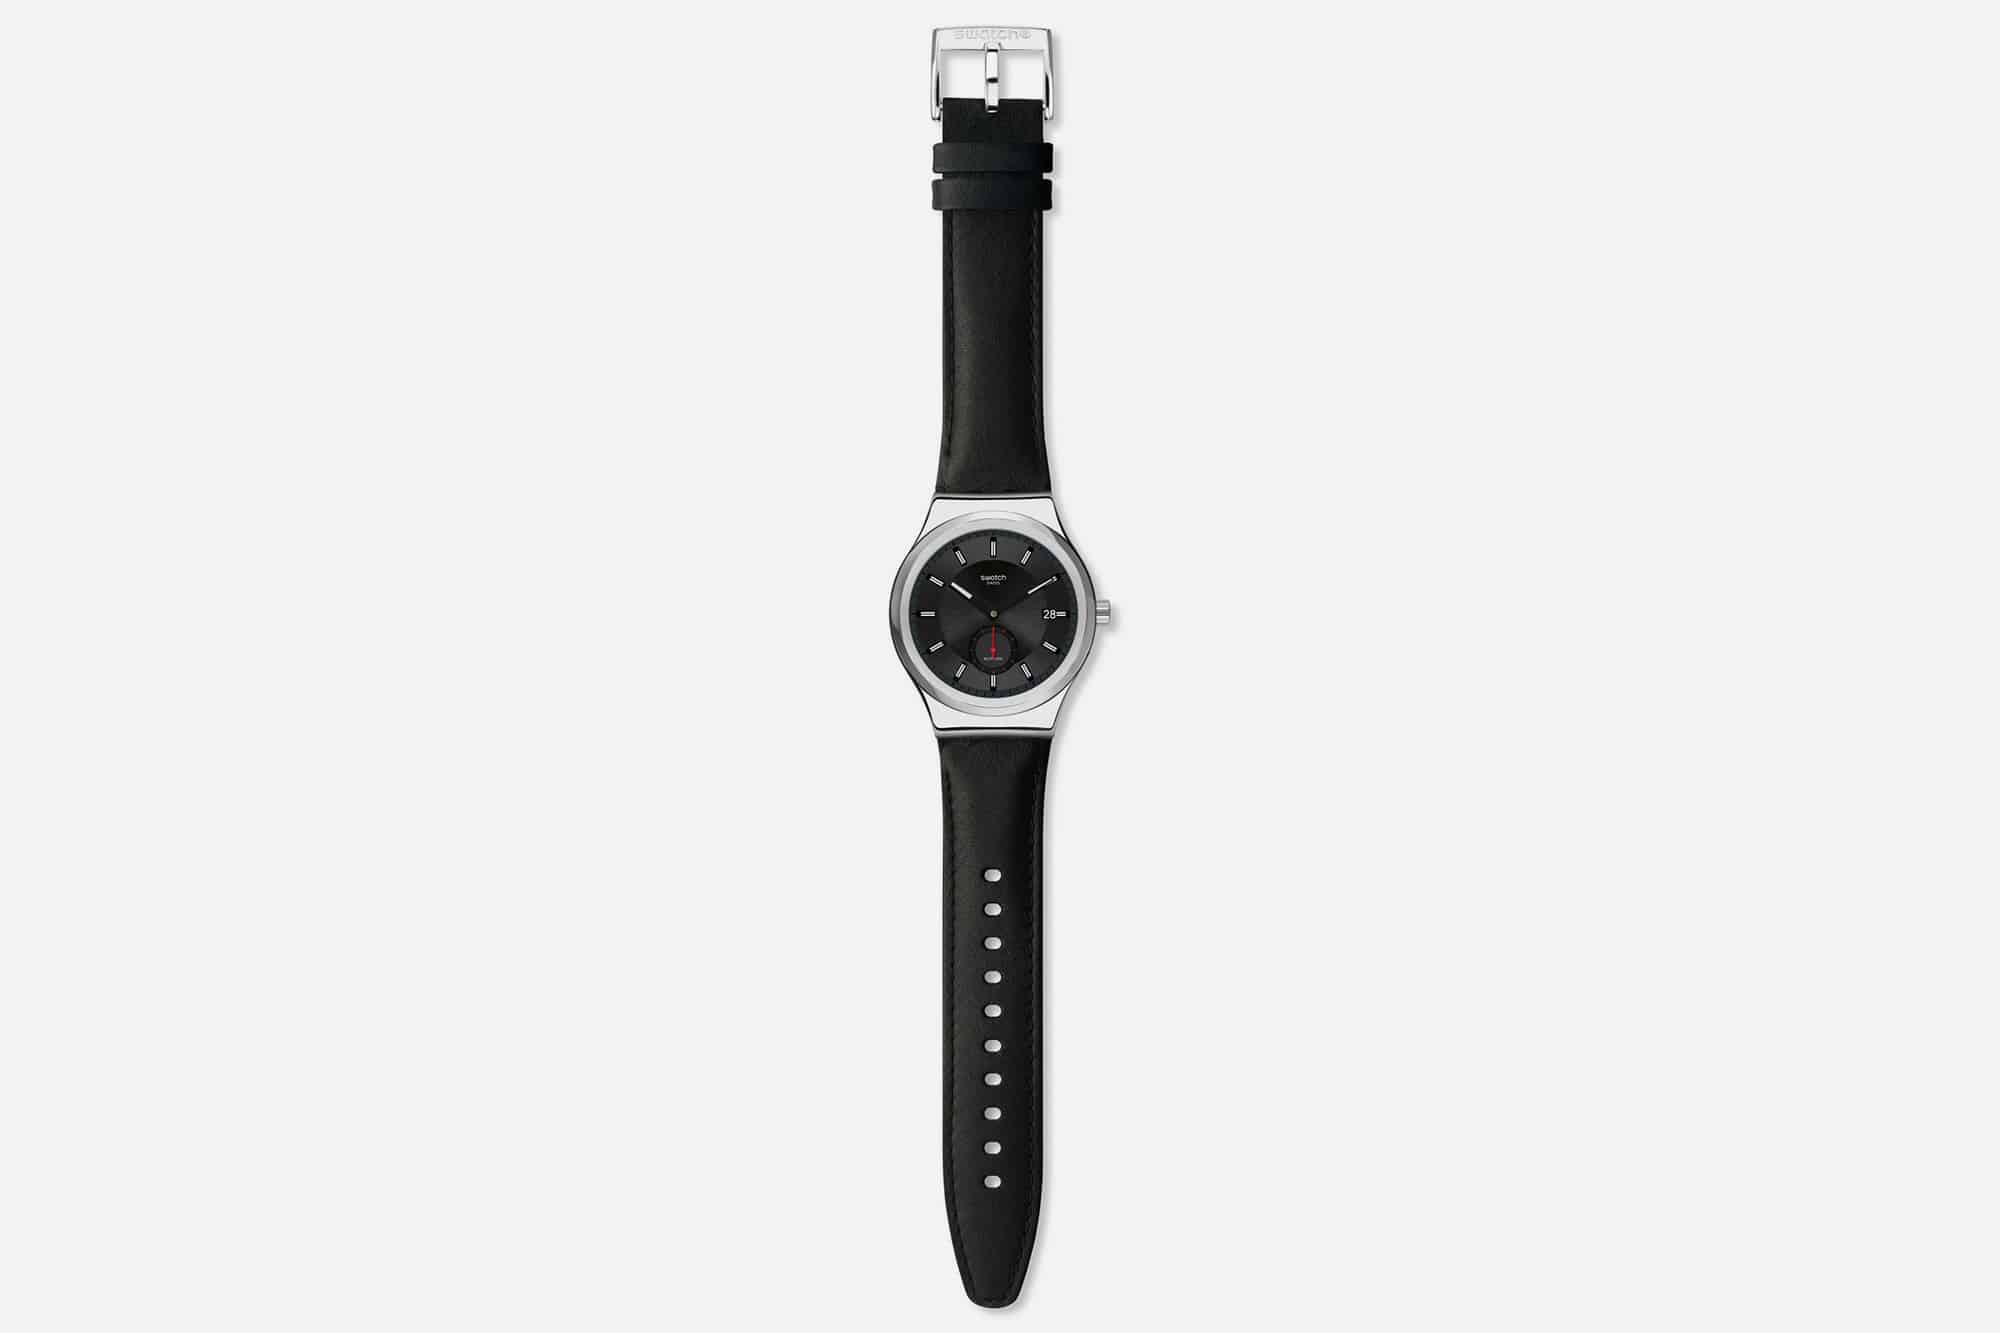 Swatch's new Sistem51 Petite Seconde Blackwatchstraplong